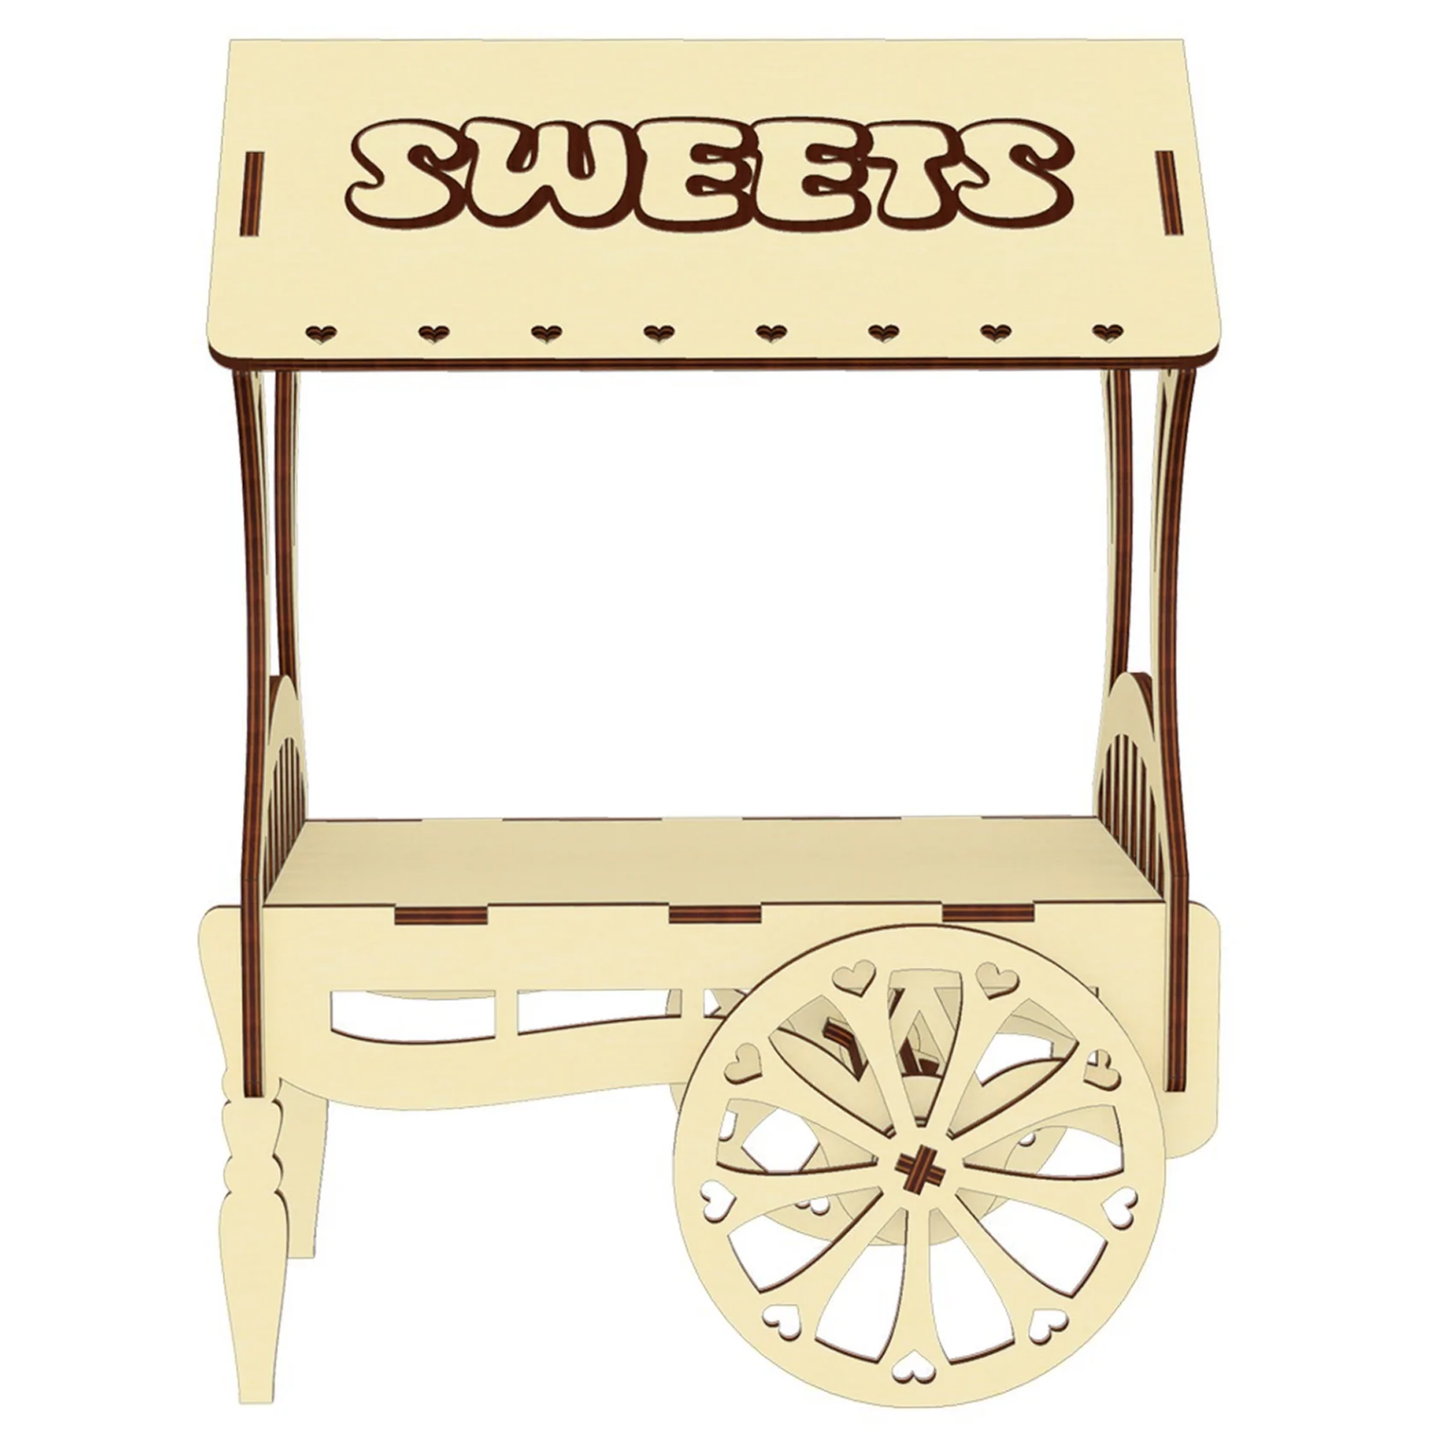 Vender Sweet Candy Push Cart